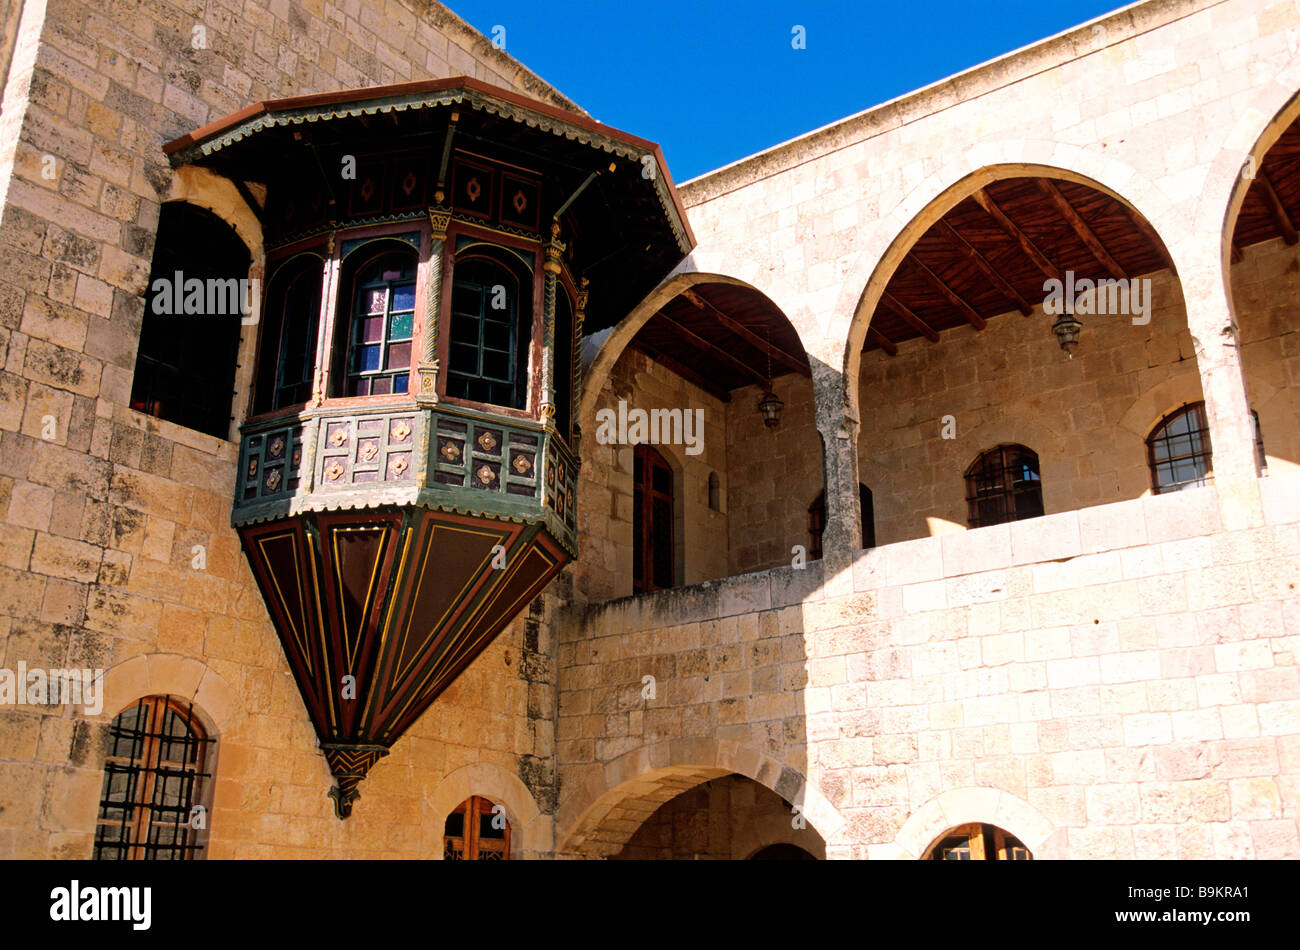 Lebanon, Chouf, Beit Ed Dine, emir Bashir palace Stock Photo